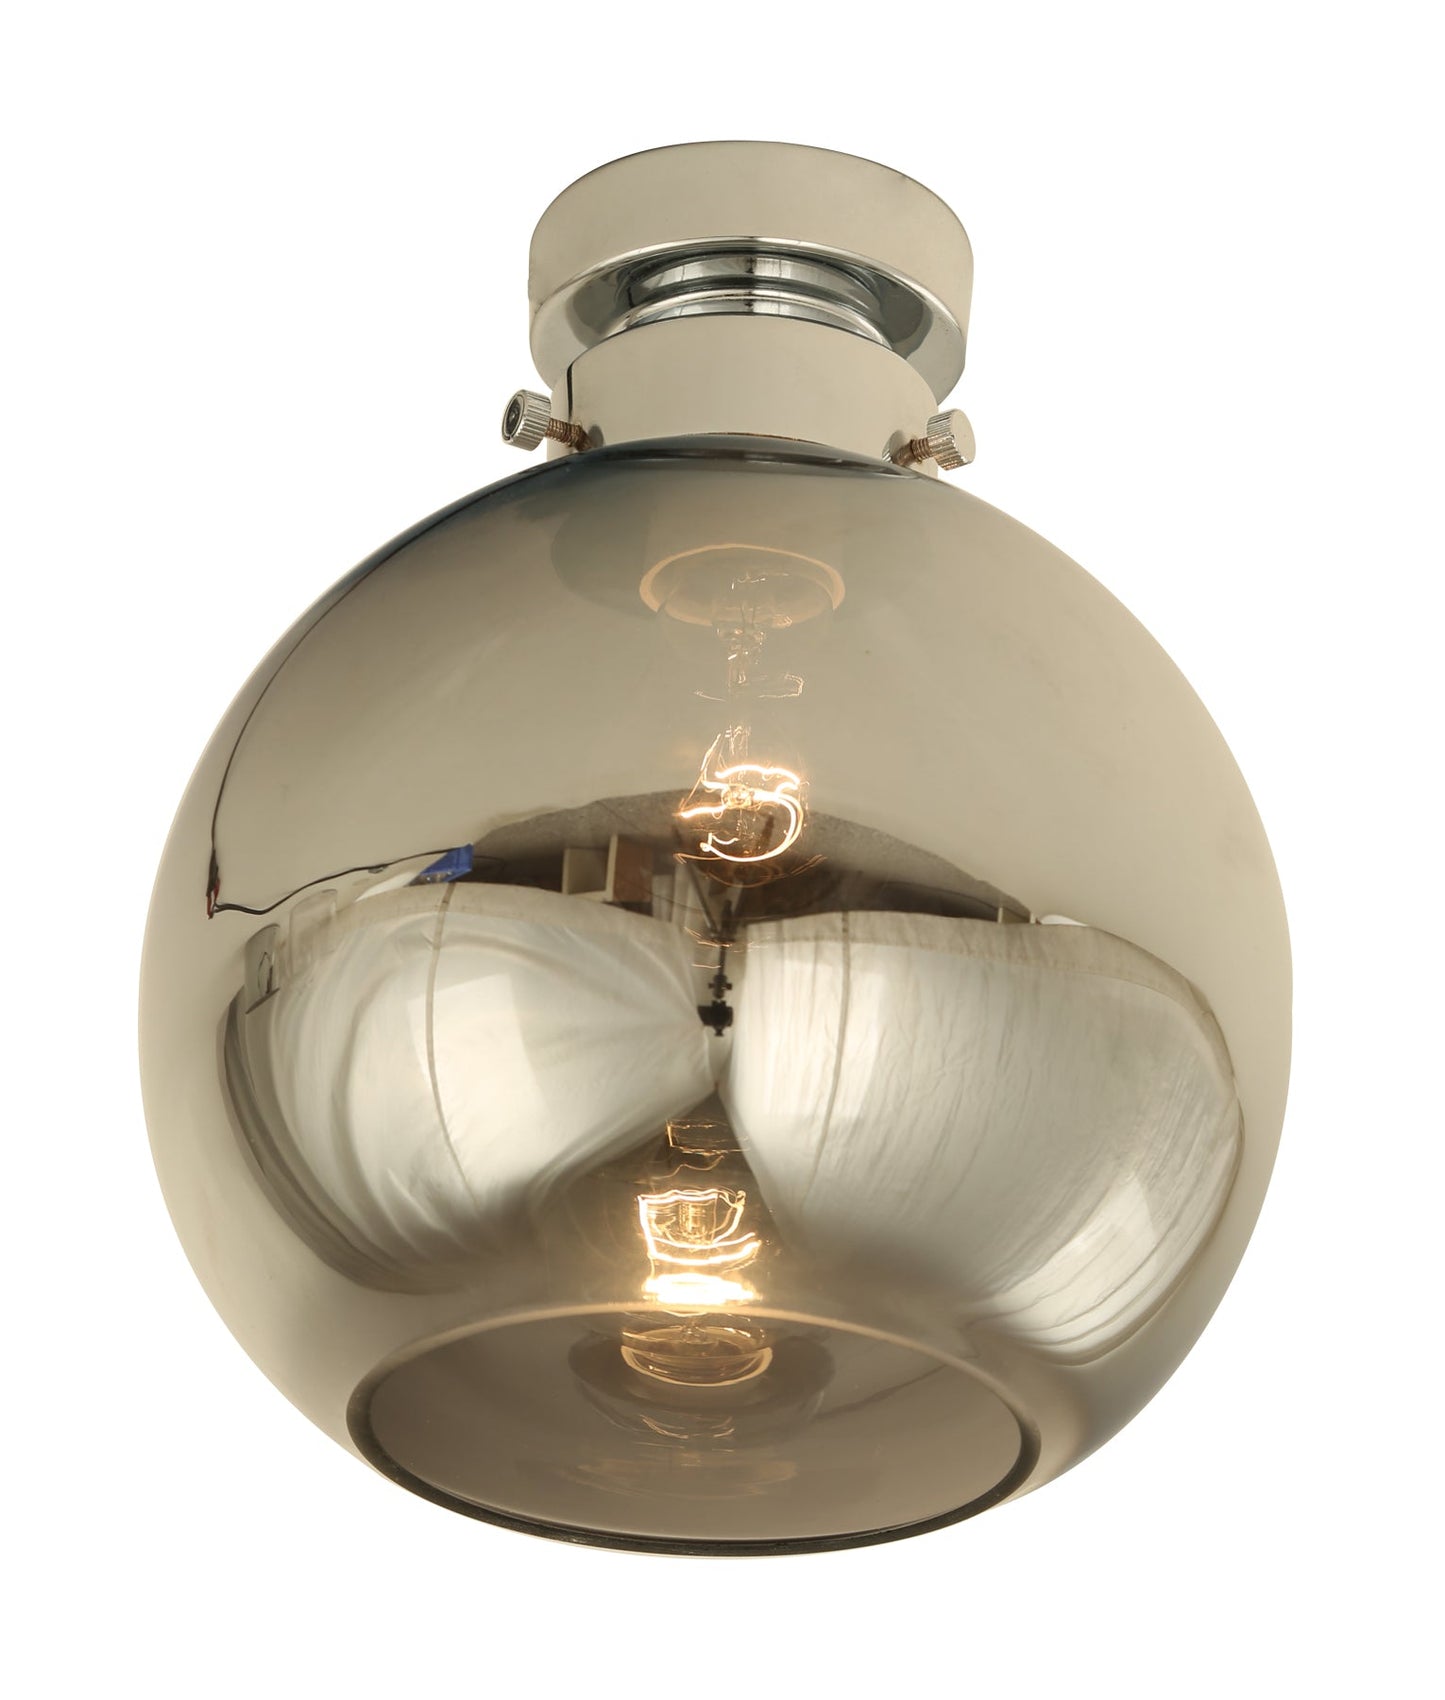 D.I.Y. Batten Fix Ceiling Lights - Wine Glass Shape Fixtures